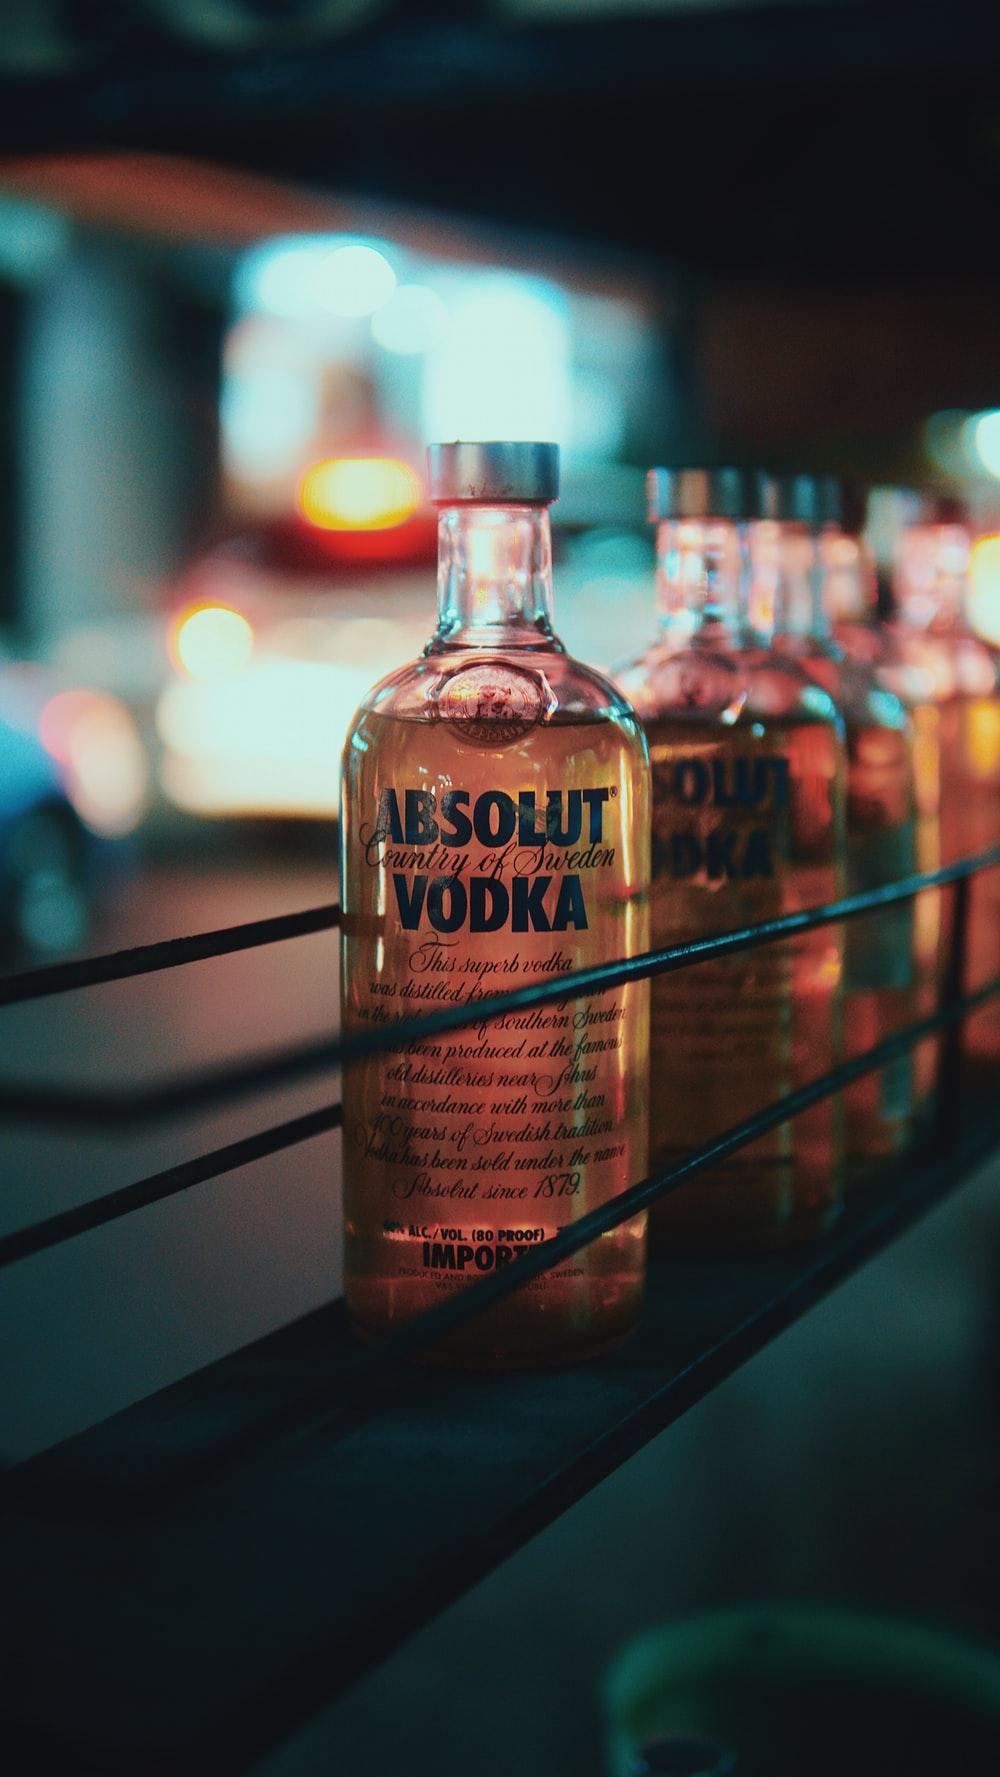 Vodka Picture [HQ]. Download Free Image